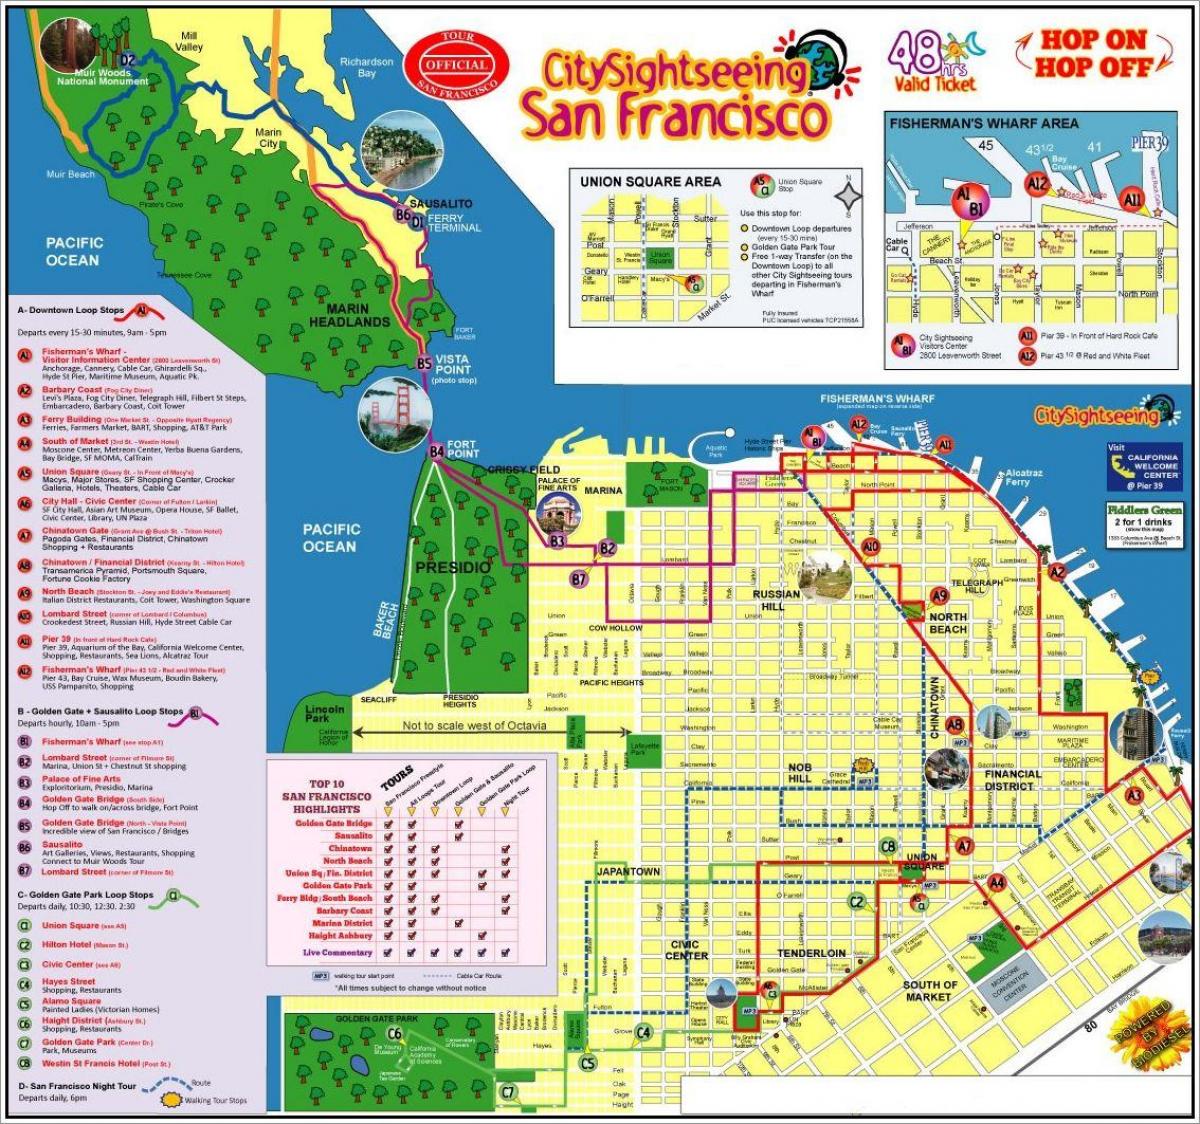 city sightseeing i San Francisco tour kart